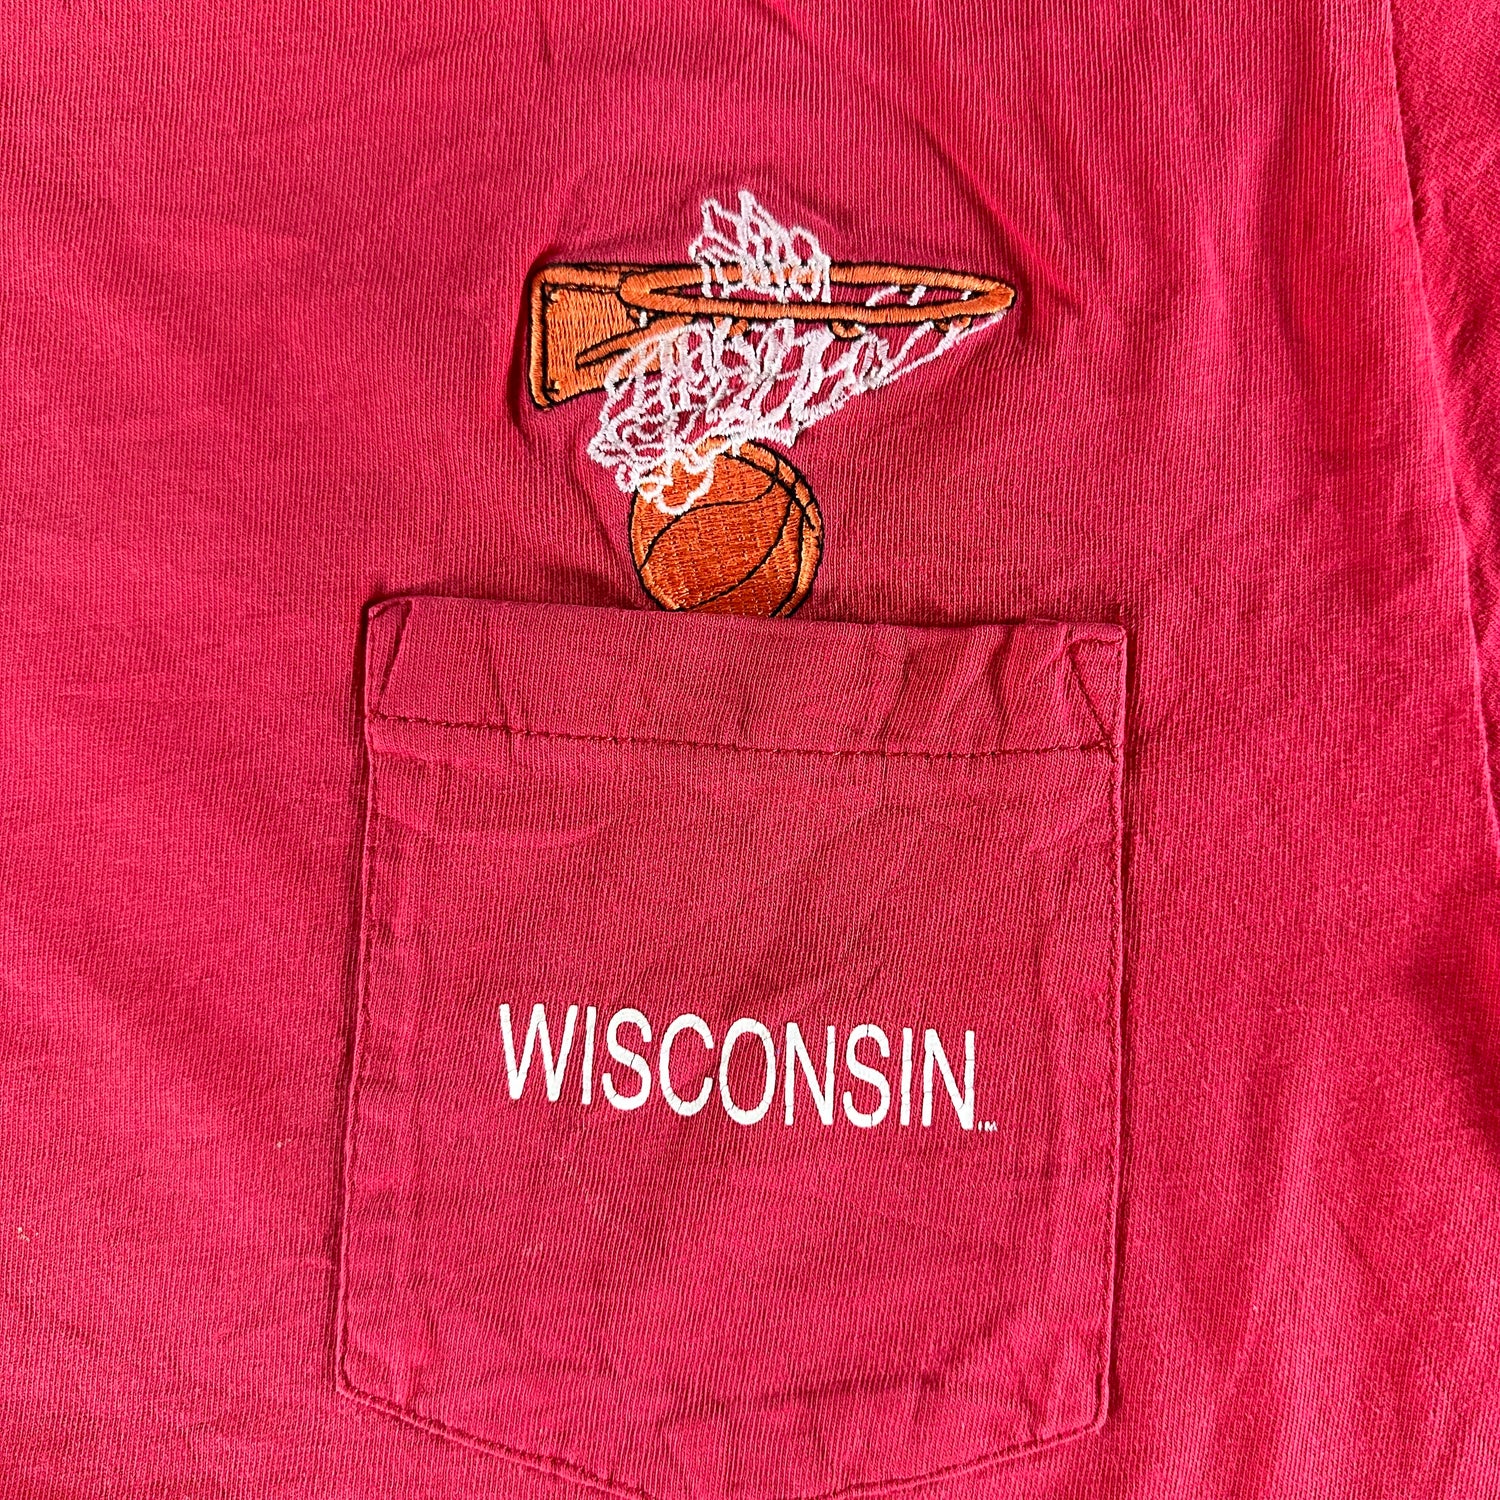 Vintage 1980s University of Wisconsin T-shirt size Large